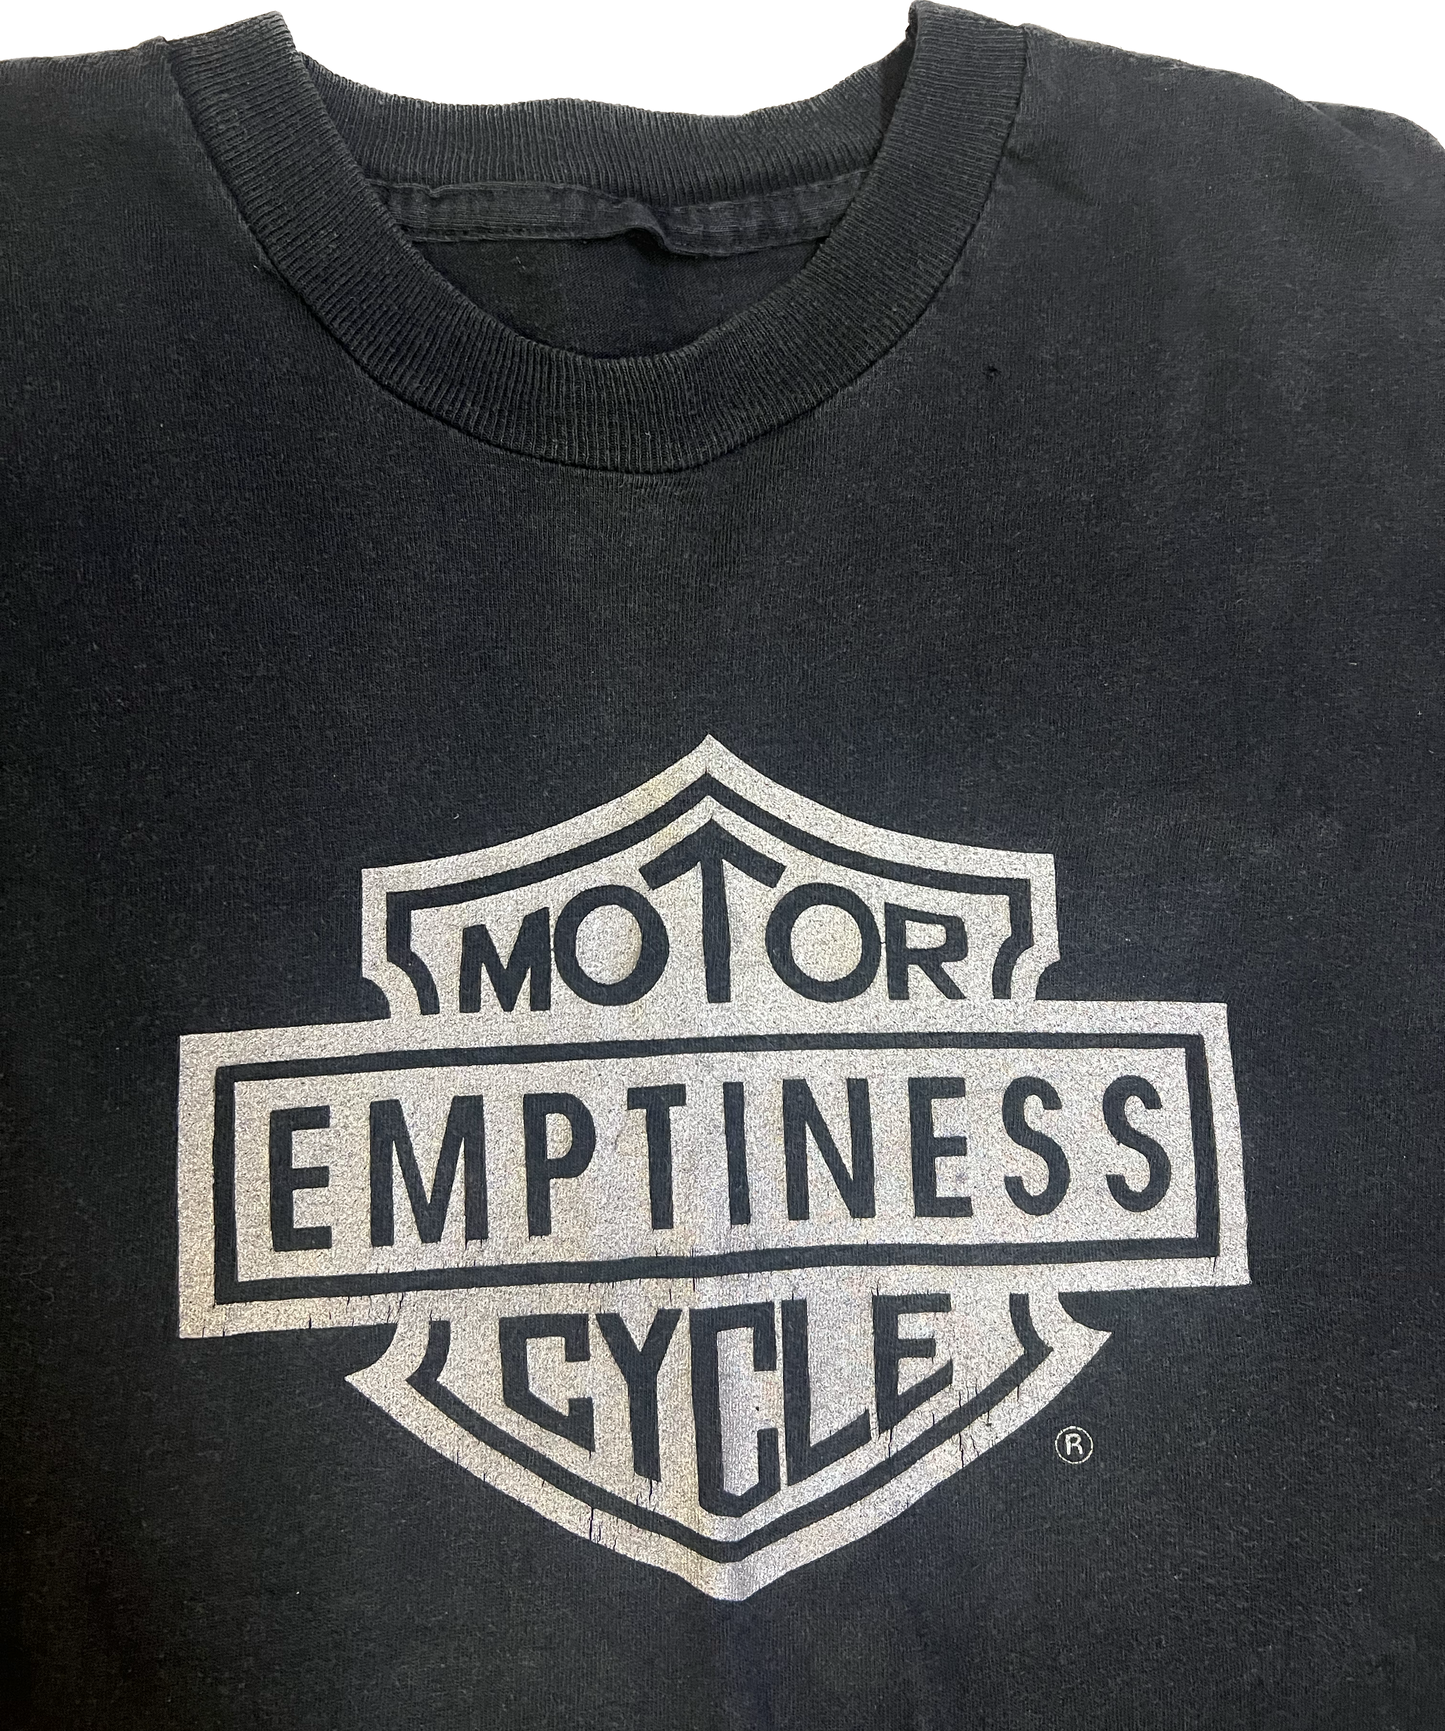 90's Manic Street Preachers Motorcycle Emptiness vintage T-shirt